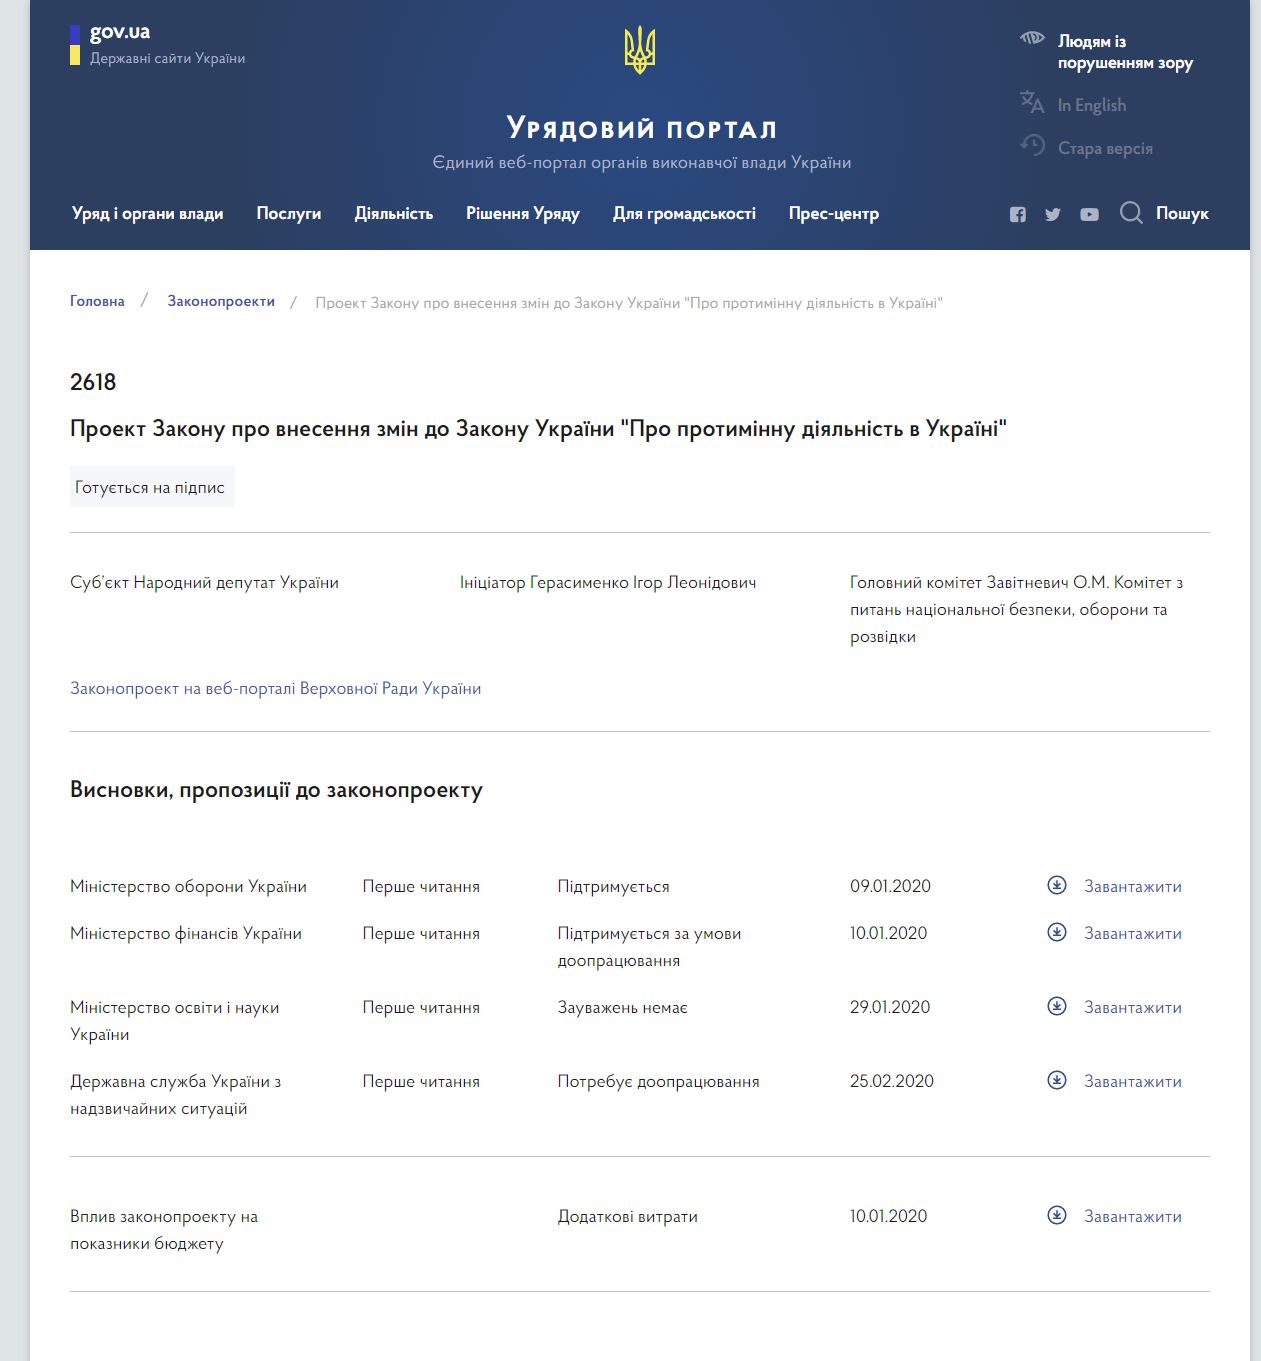 https://www.kmu.gov.ua/bills/proekt-zakonu-pro-vnesennya-zmin-do-zakonu-ukraini-pro-protiminnu-diyalnist-v-ukraini-2